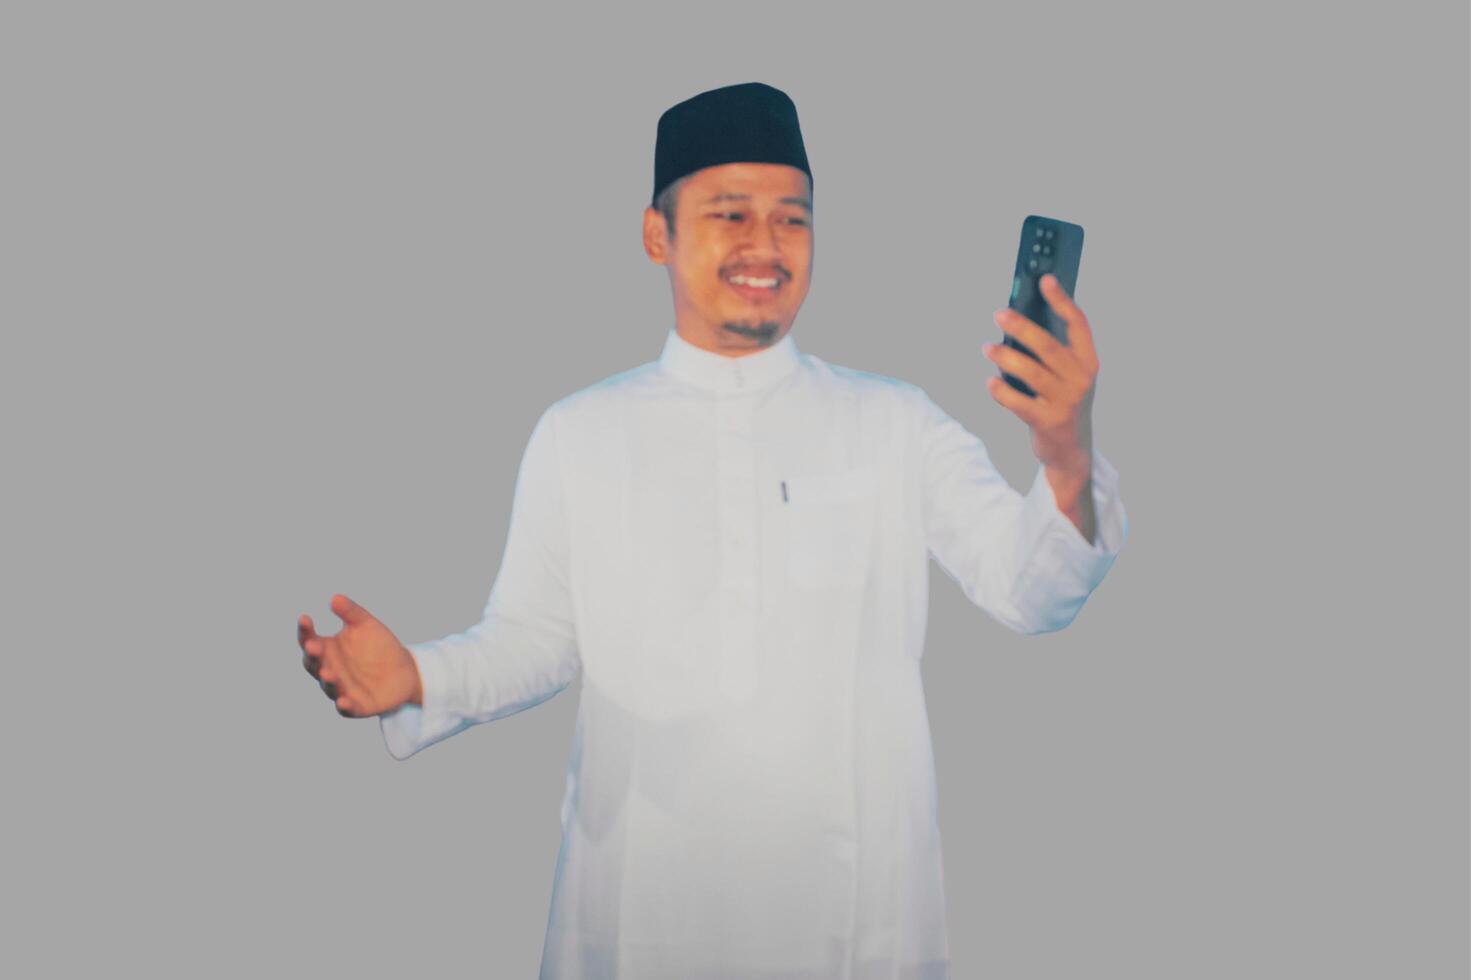 muçulmano ásia homem sorridente feliz enquanto olhando para dele Móvel telefone foto